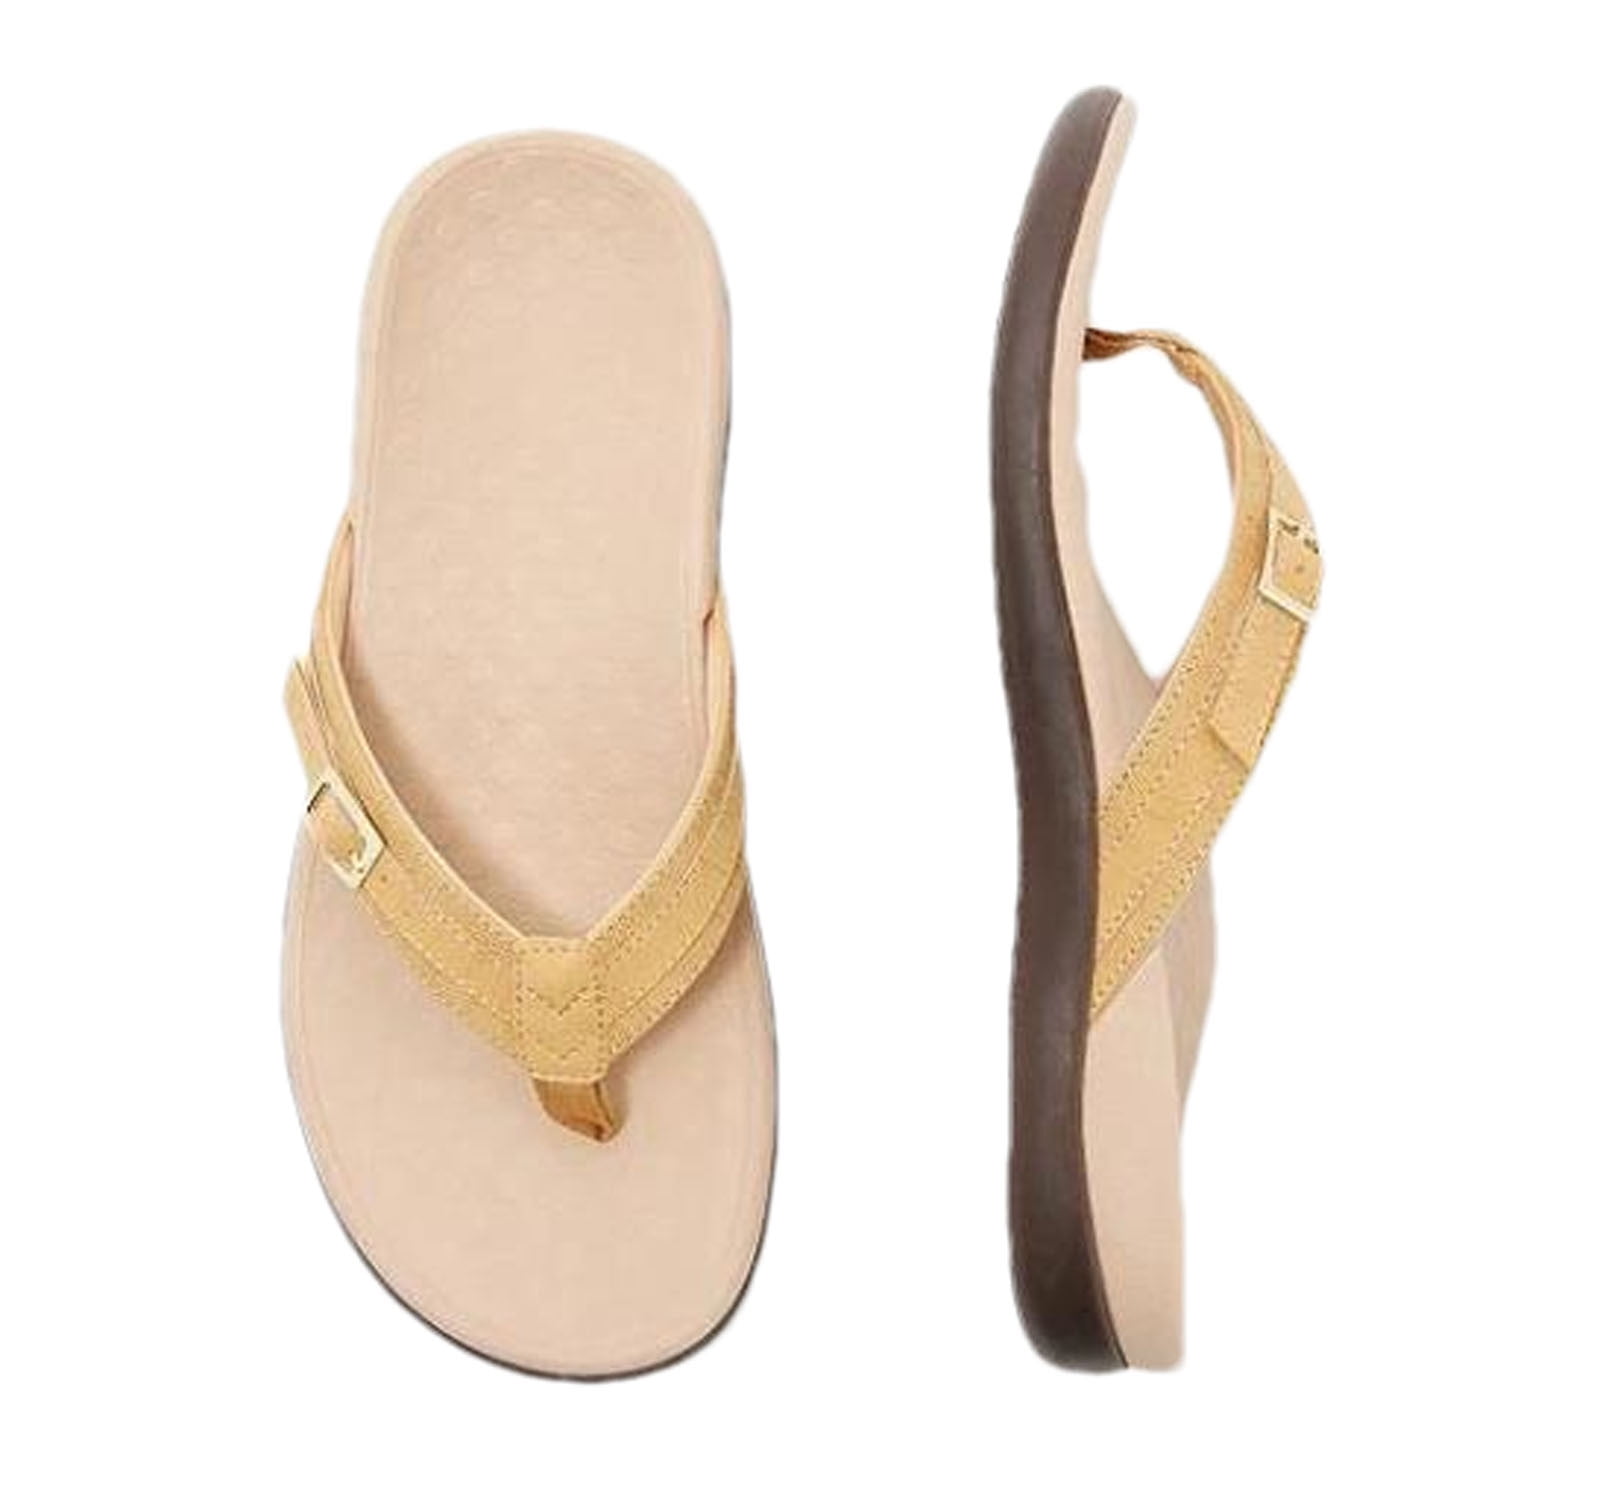 Wedge Sandals for Women Ladies Yoga Mat Comfortable Walking Flat Sandals with Plantar Fasciitis Arch Support Slip On Indoor Outdoor for Summer Flip Flops 